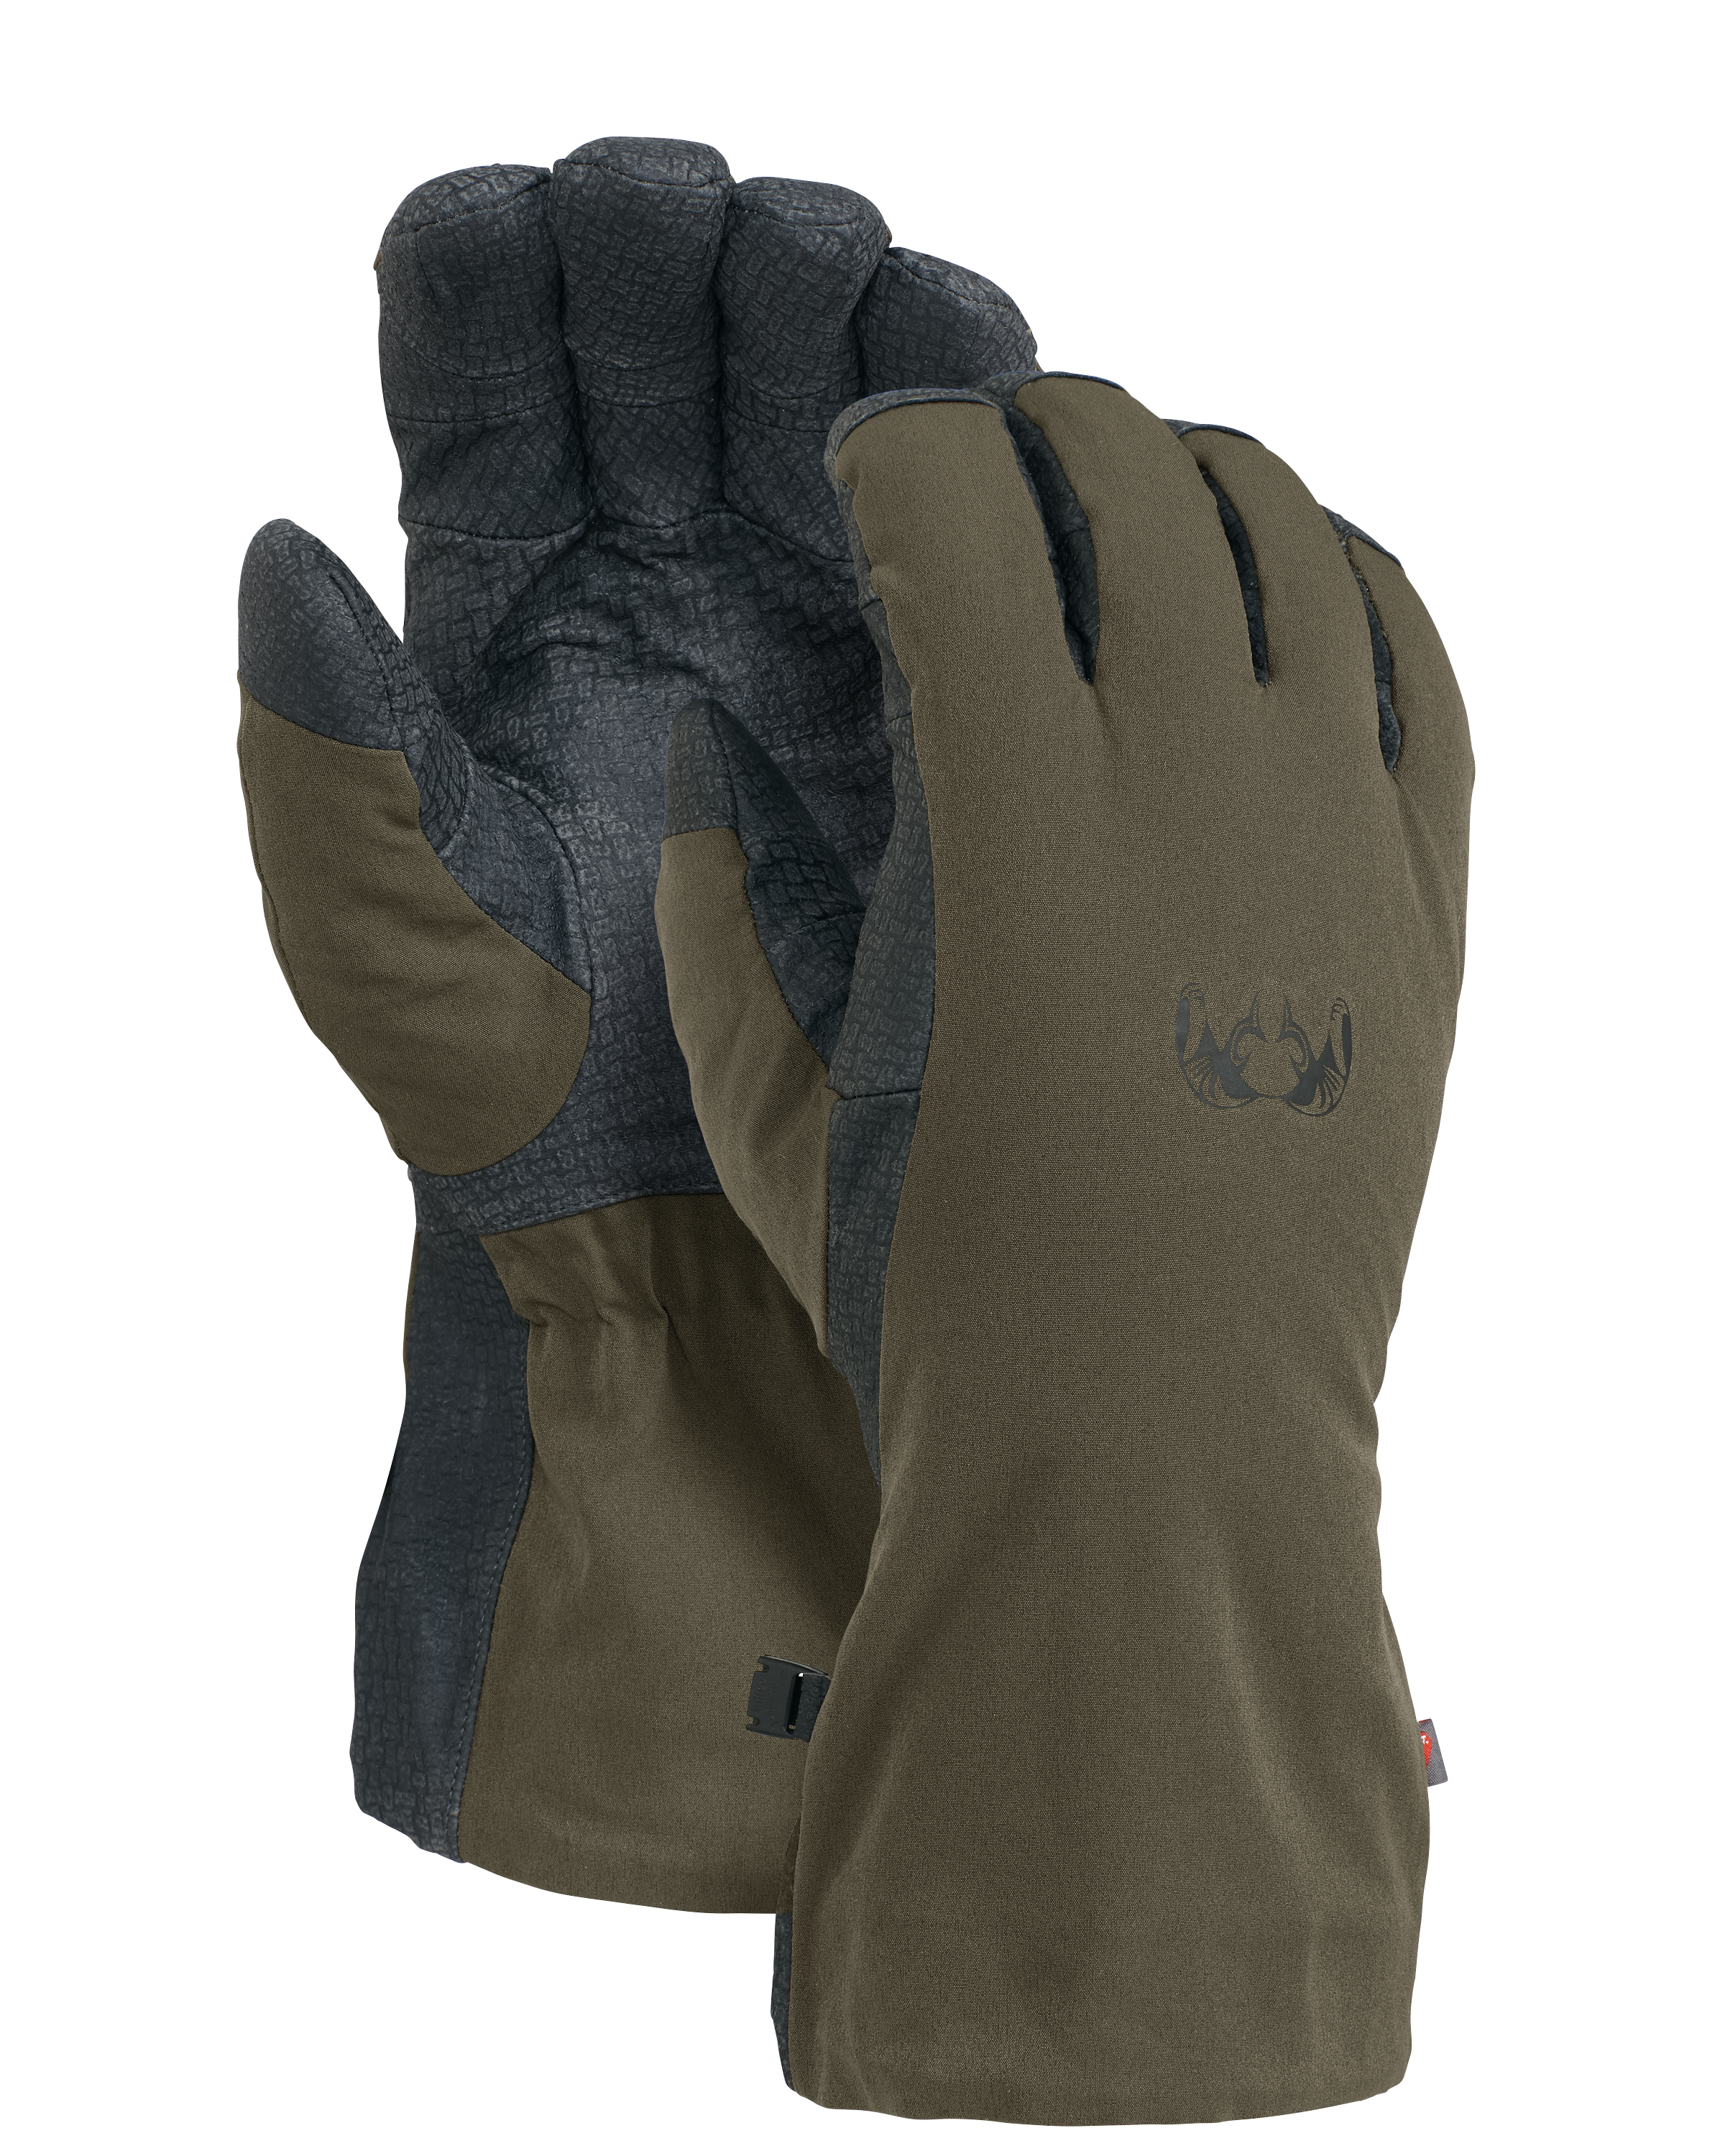 KUIU Northstar Hunting Glove in Ash | Size 2XL